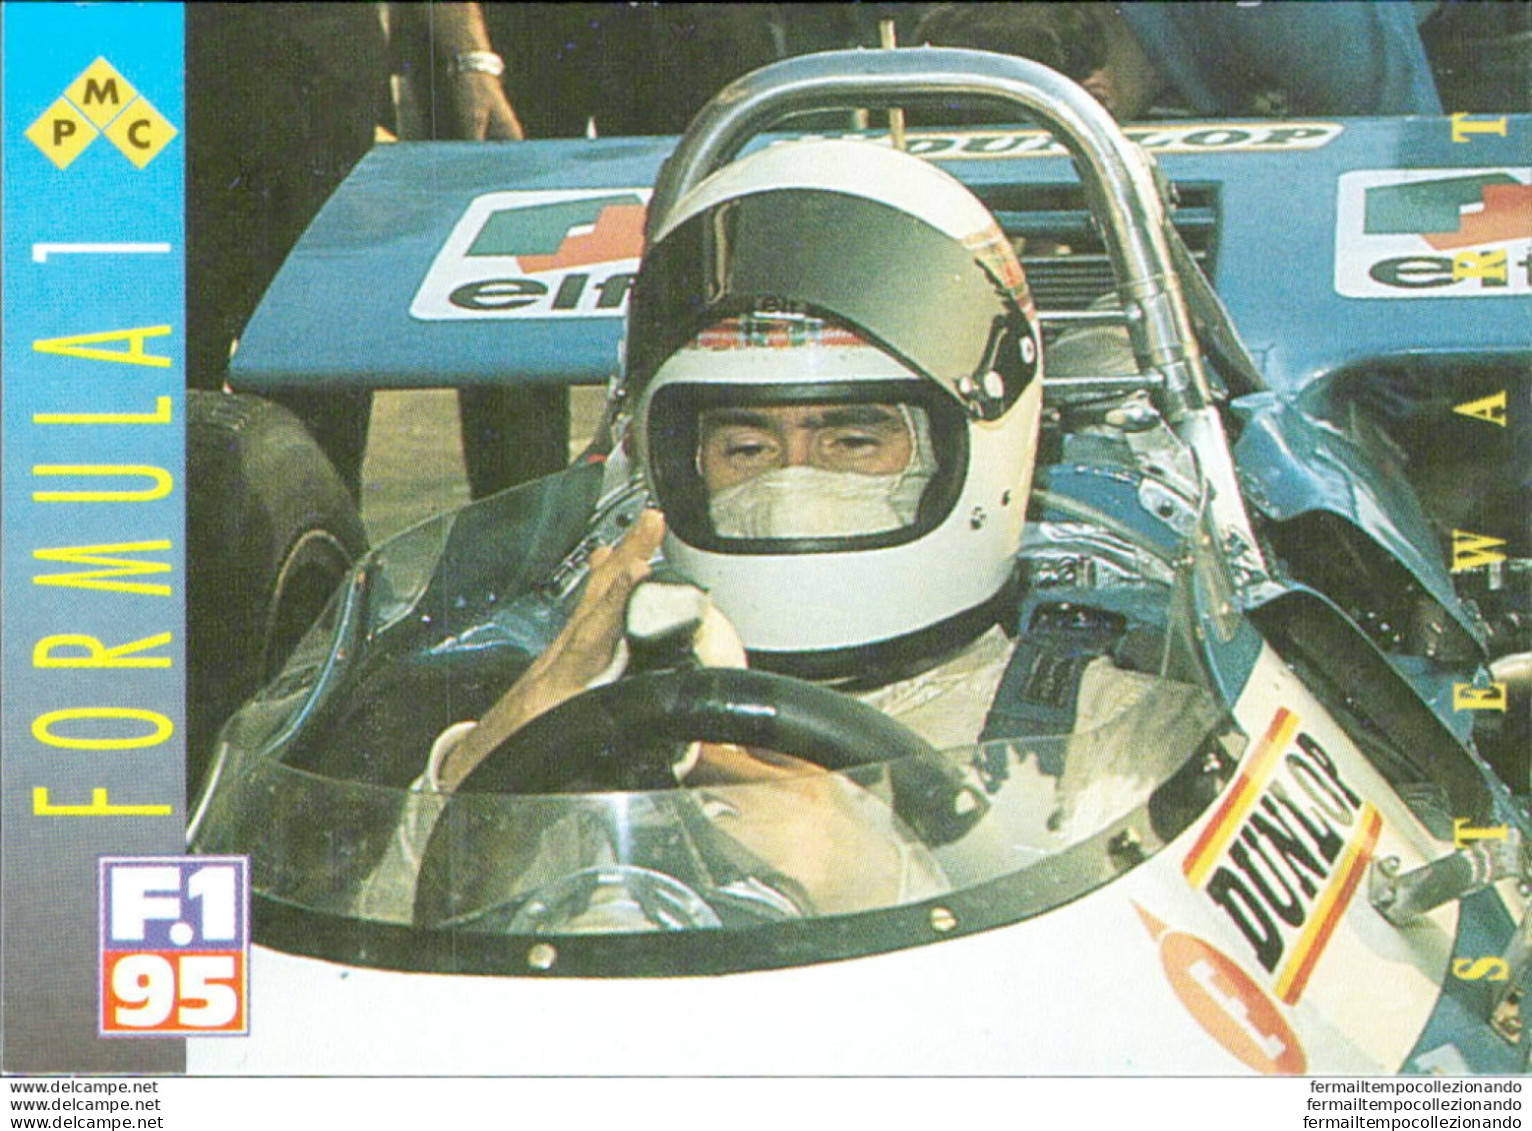 Bh18 1995 Formula 1 Gran Prix Collection Card Stewart N 18 - Catalogues